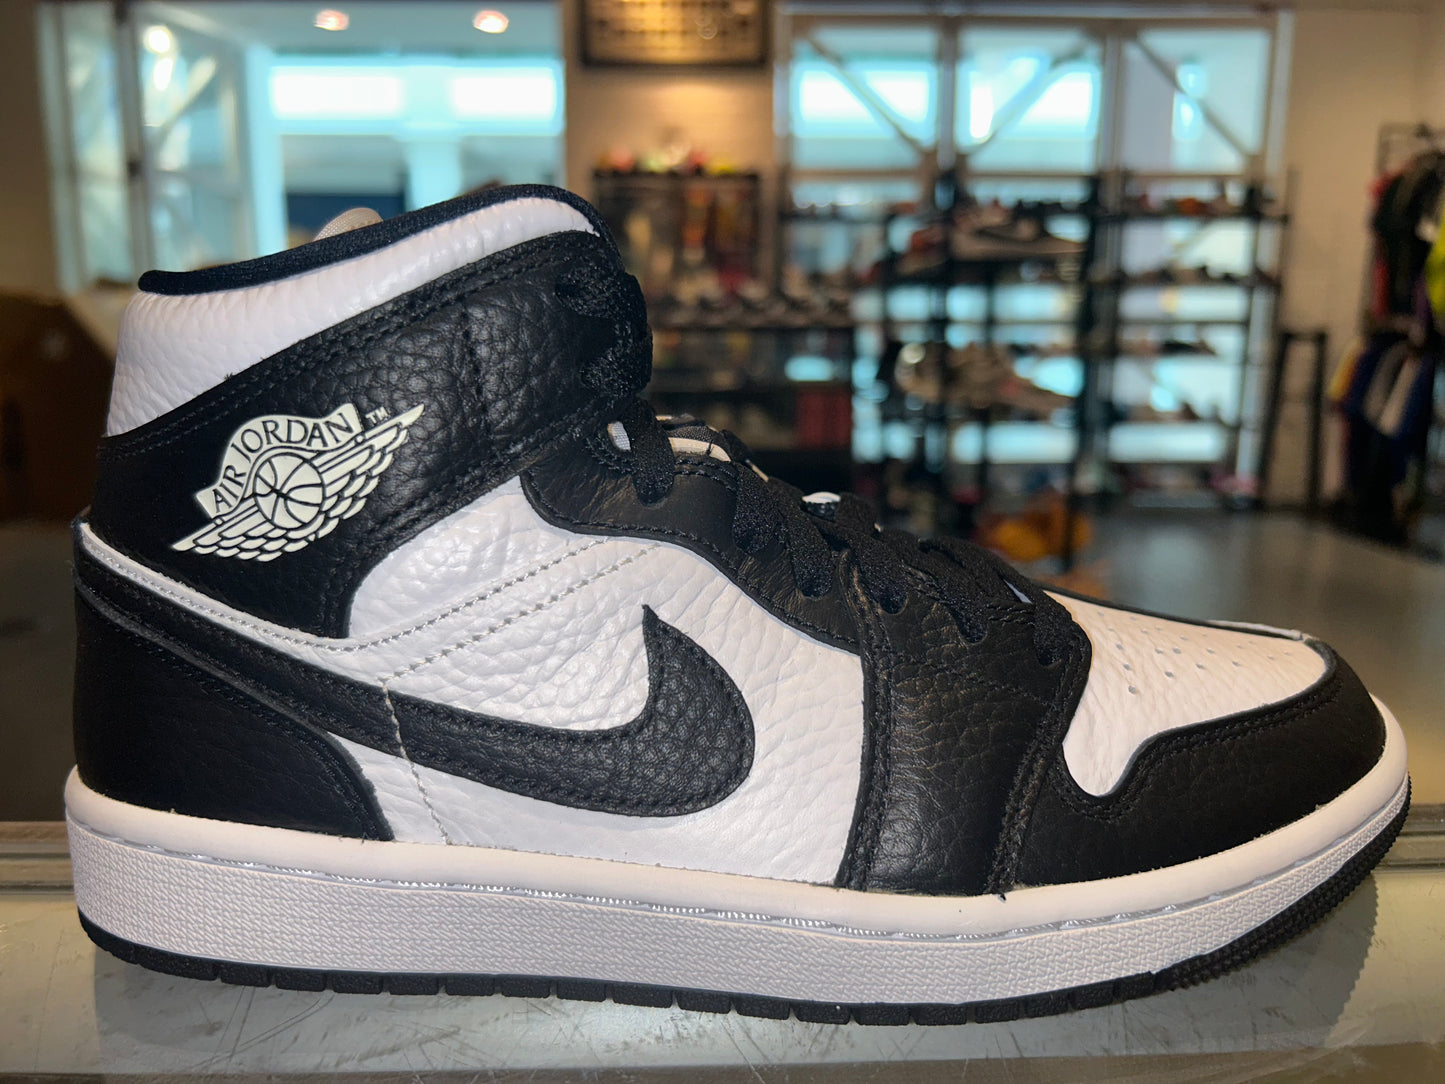 Size 6.5 (8W) Air Jordan 1 Mid “Black White” Brand New (Mall)